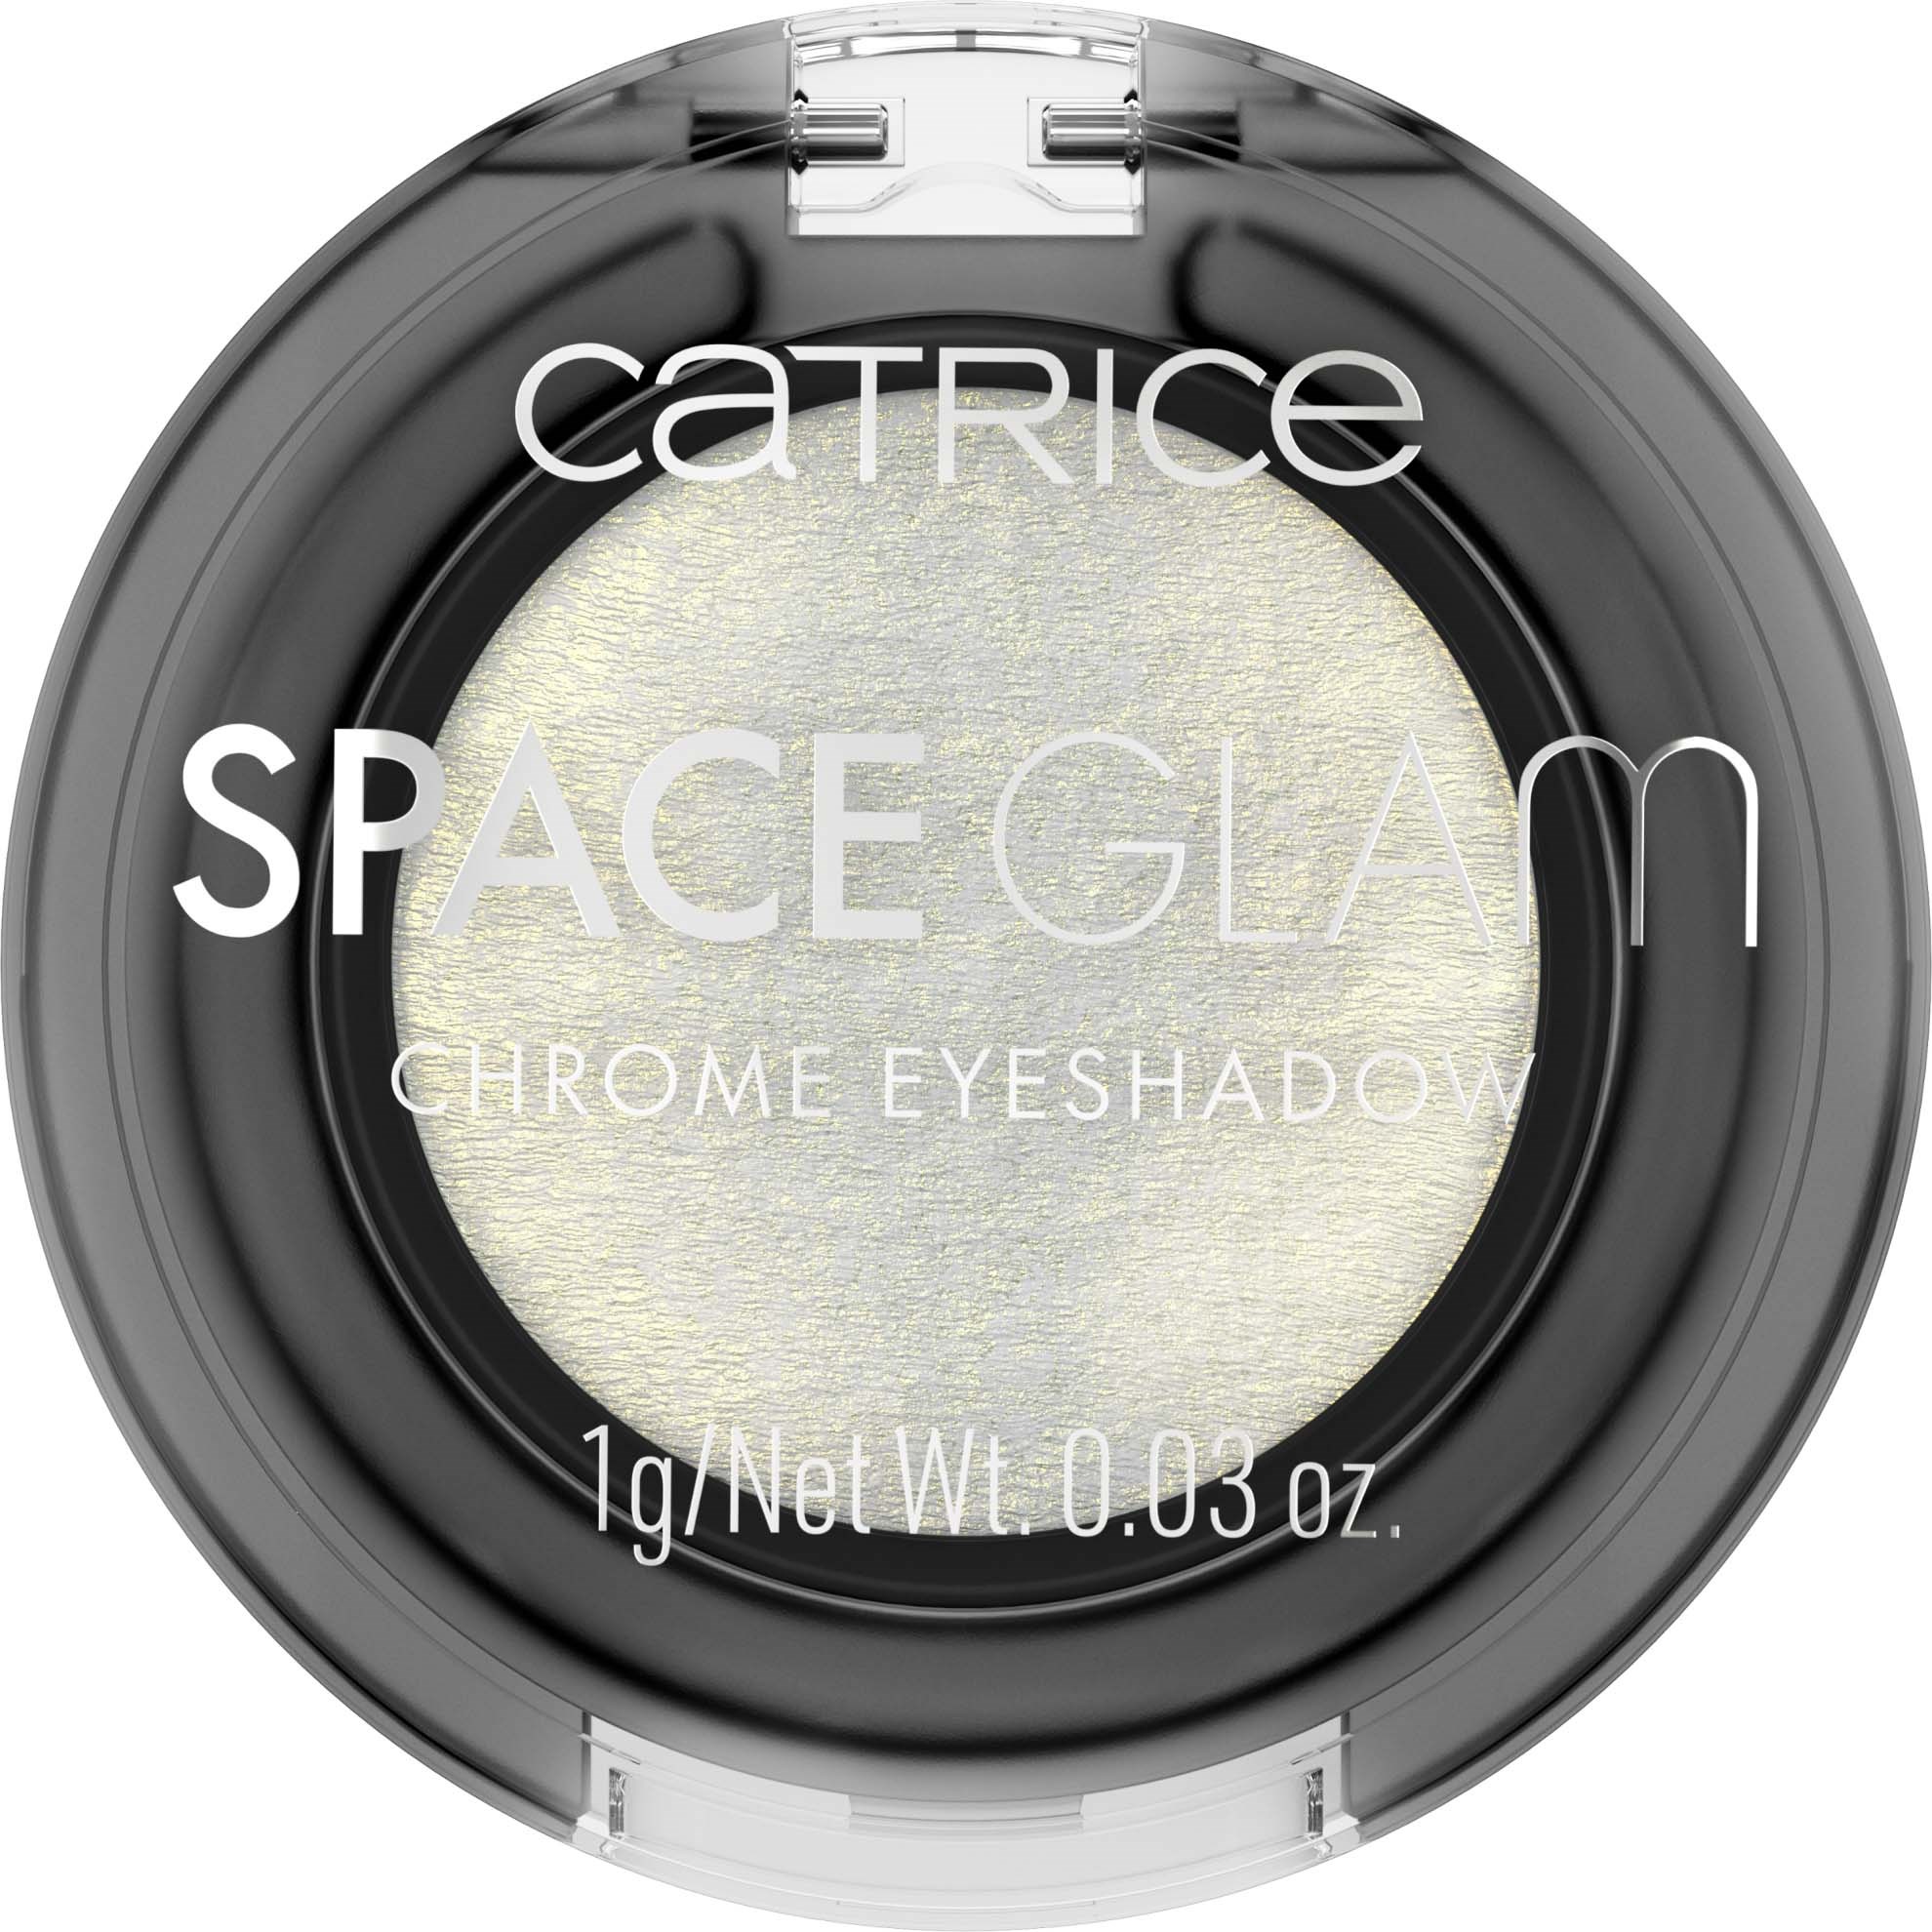 Bilde av Catrice Space Glam Chrome Eyeshadow 010 Moonlight Glow